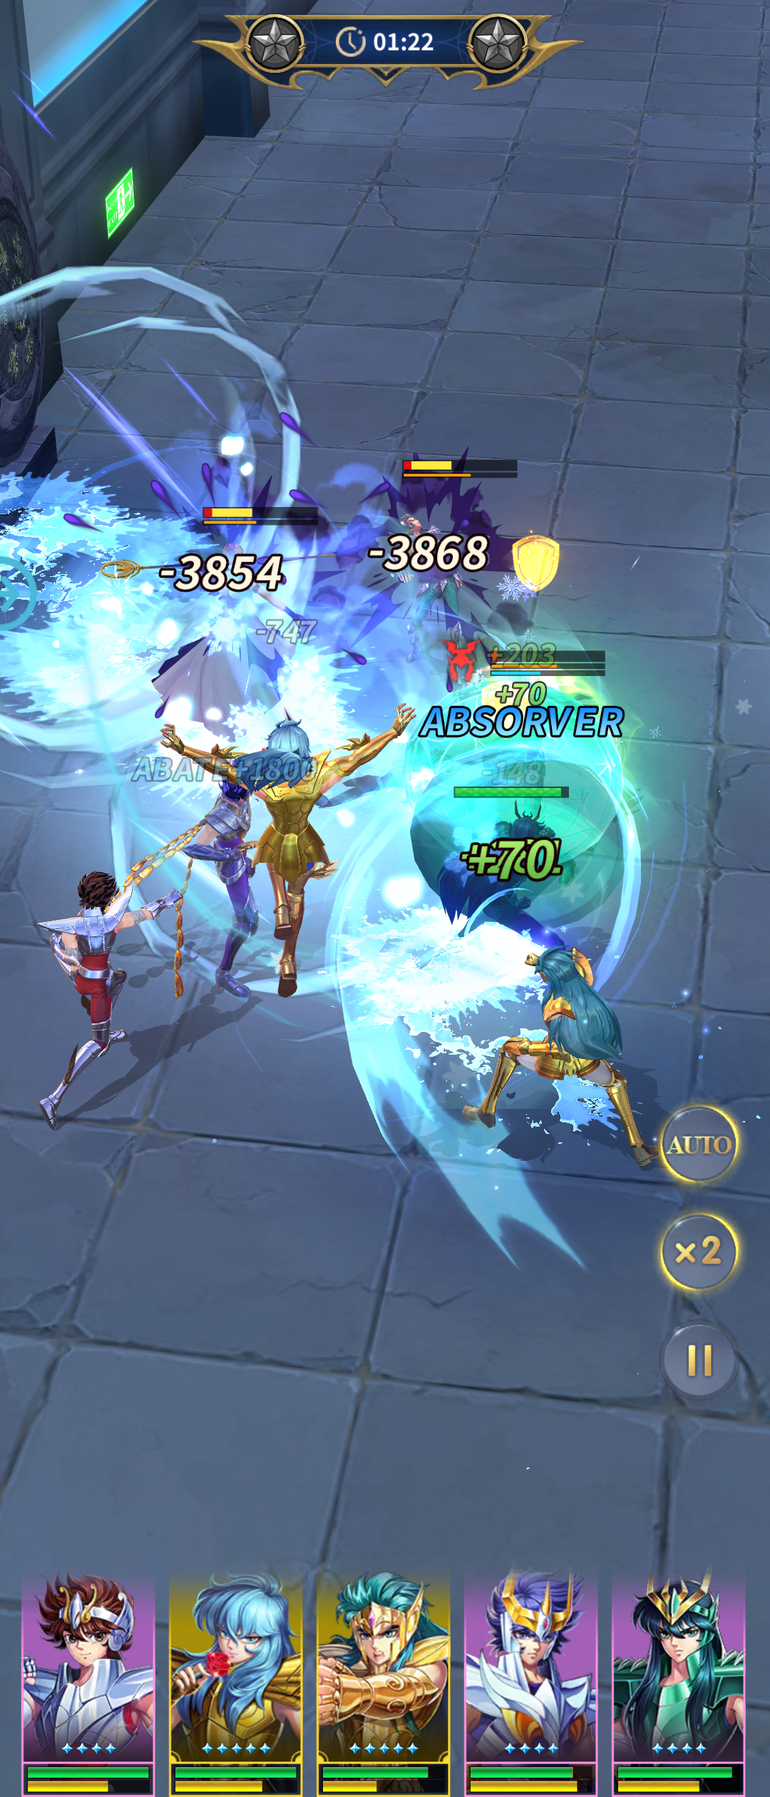 Personagens lutando no jogo de Saint Seiya.